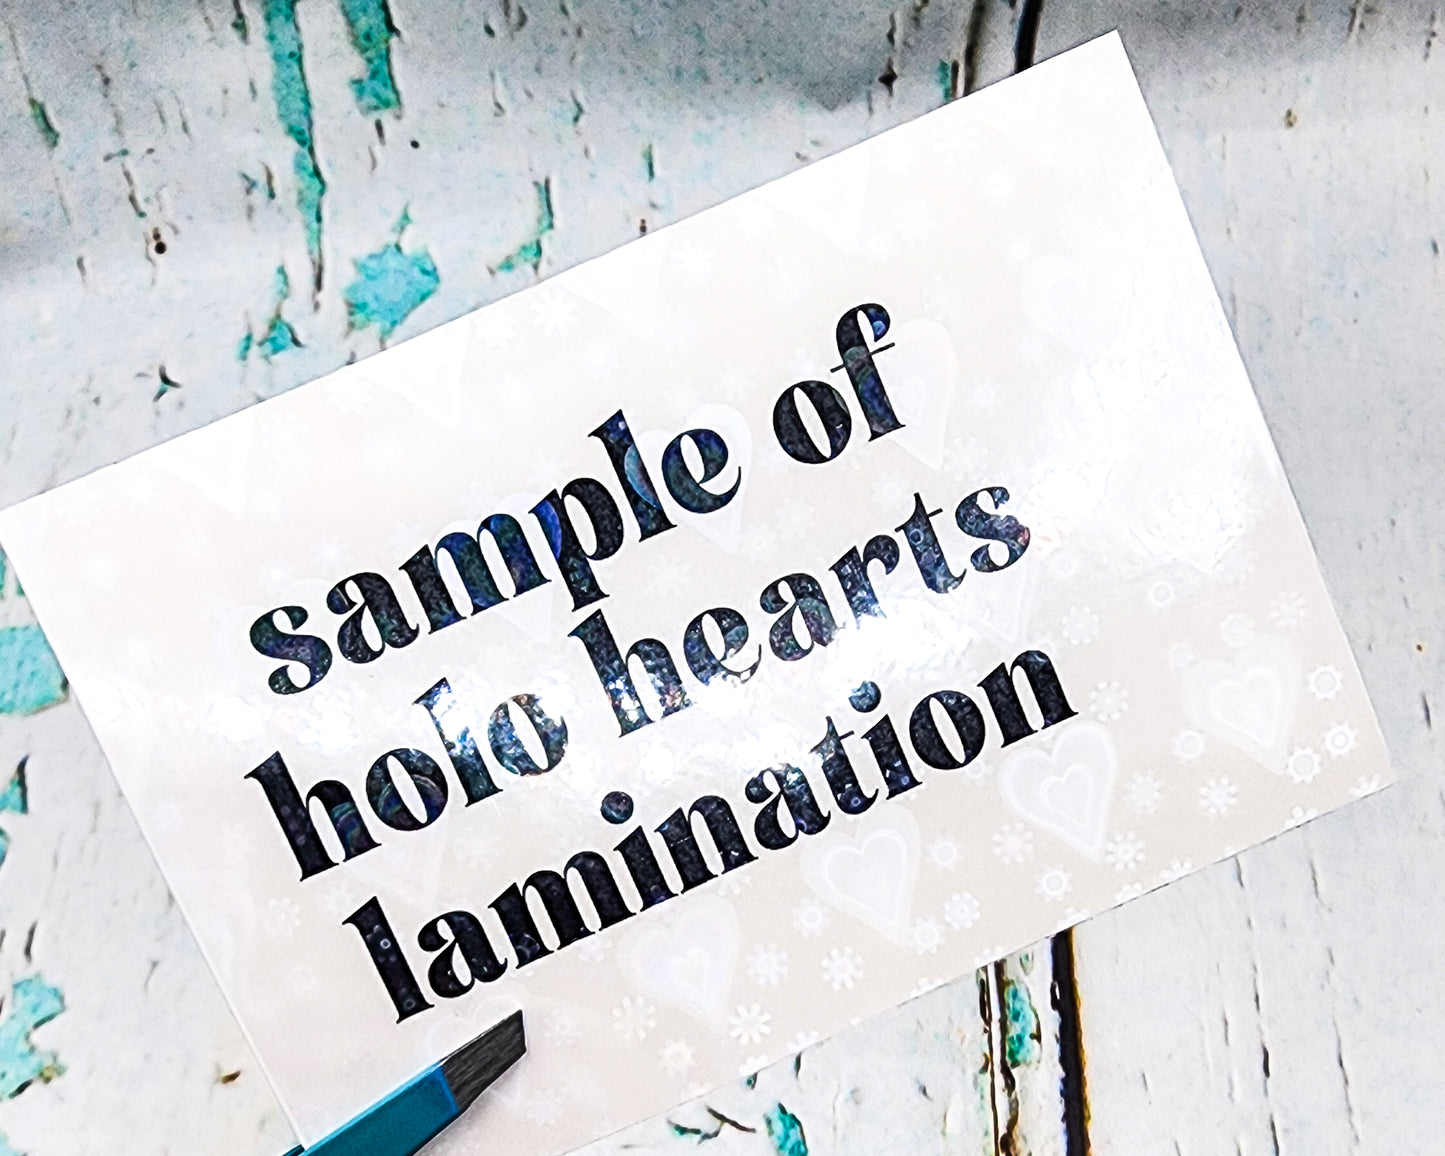 Laminated Vinyl Large Diecut Stickers- Heartbreaker